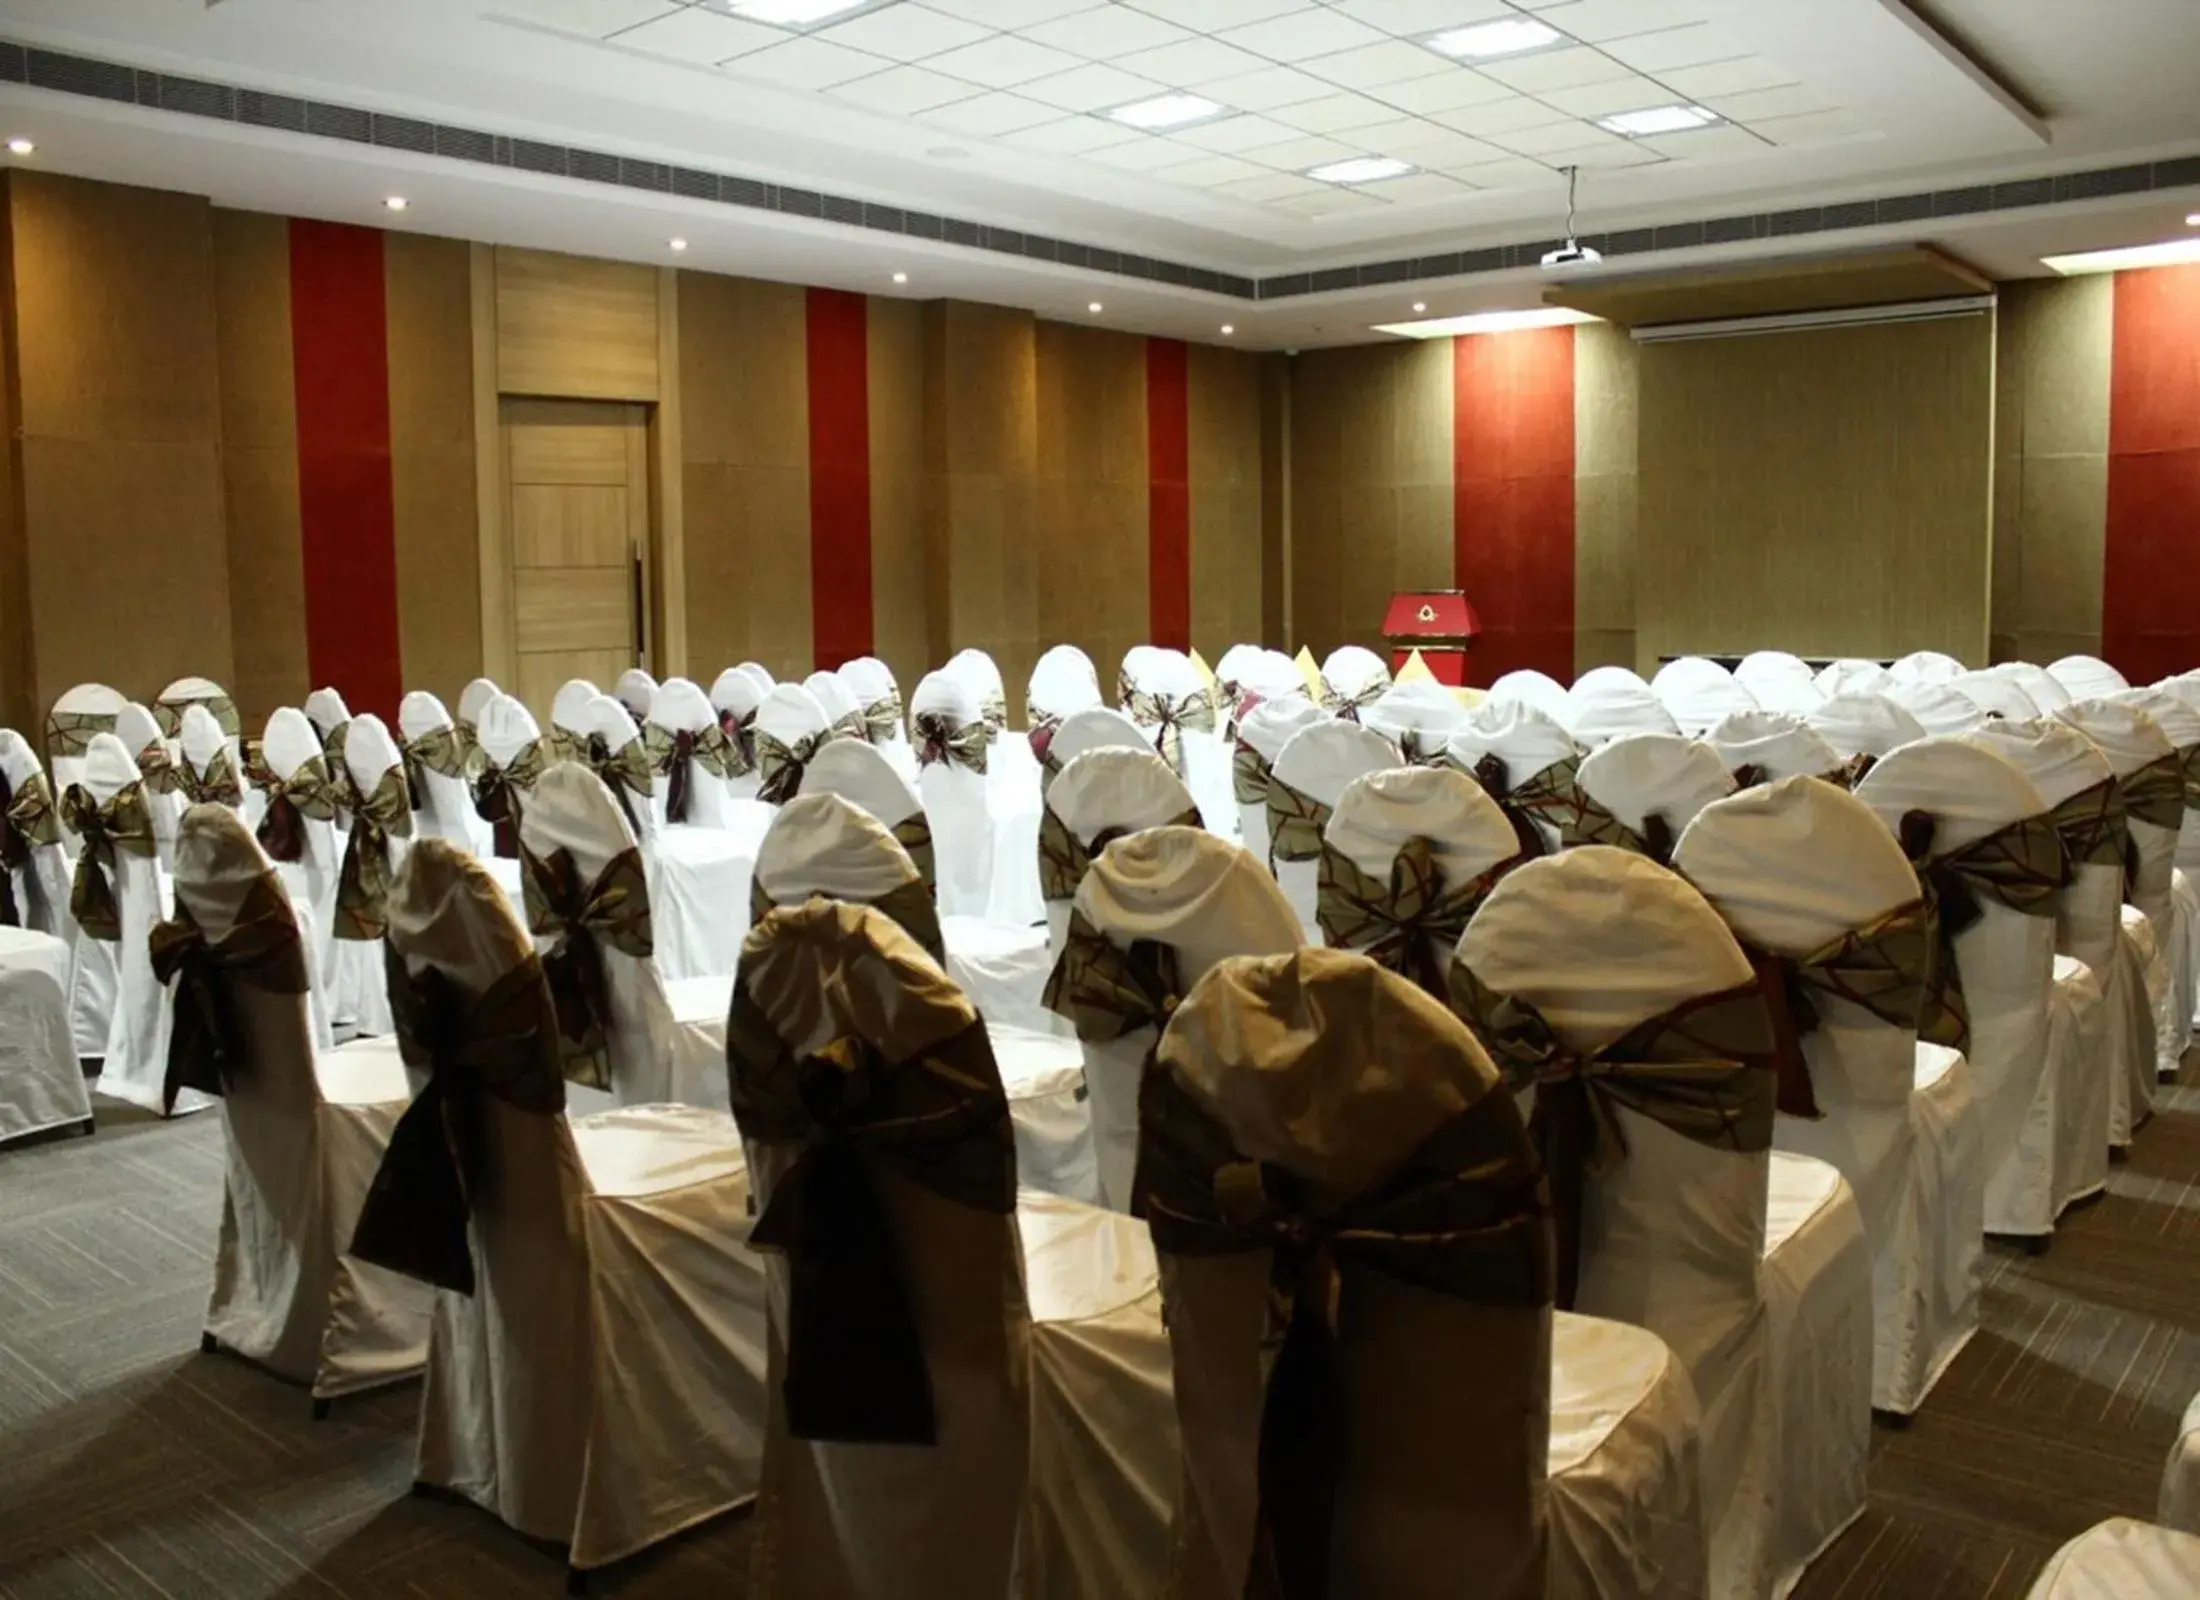 Meeting/conference room, Banquet Facilities in Nidhivan Sarovar Portico